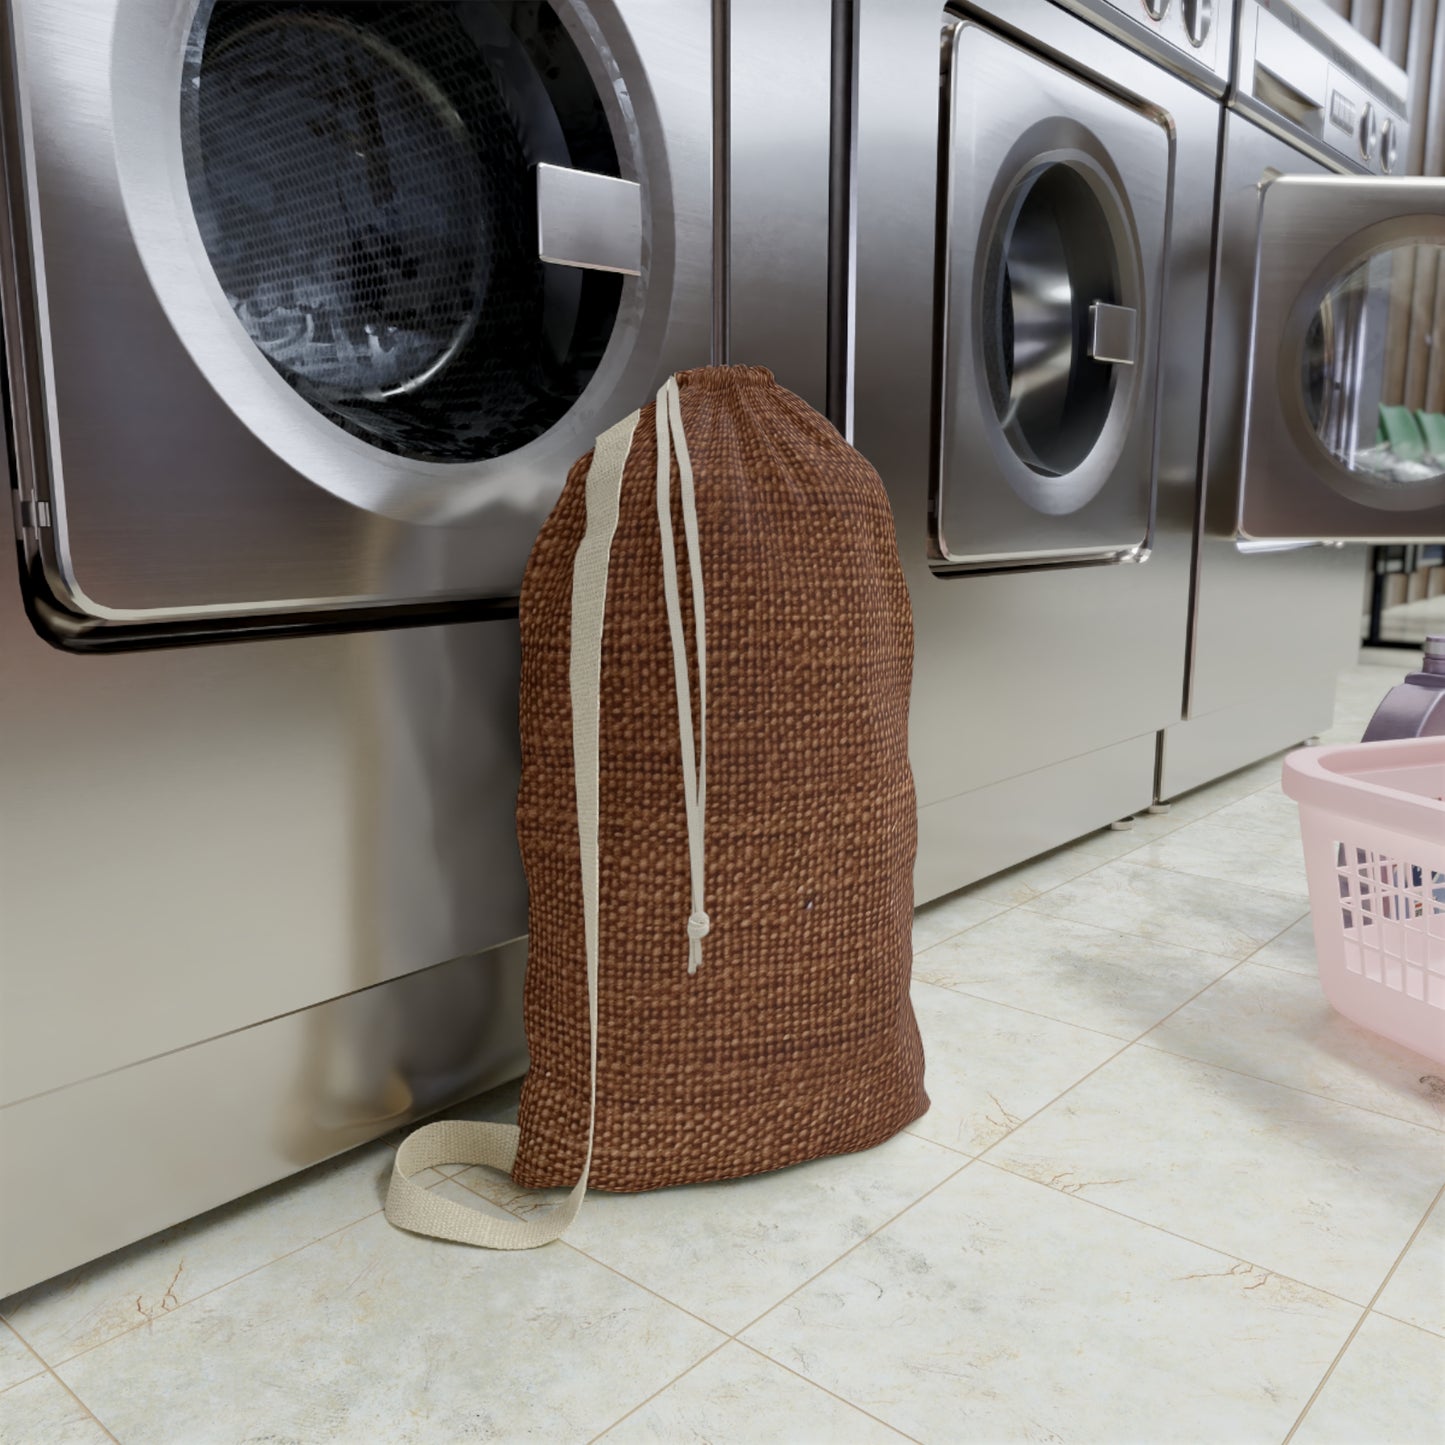 Luxe Dark Brown: Denim-Inspired, Distinctively Textured Fabric - Laundry Bag